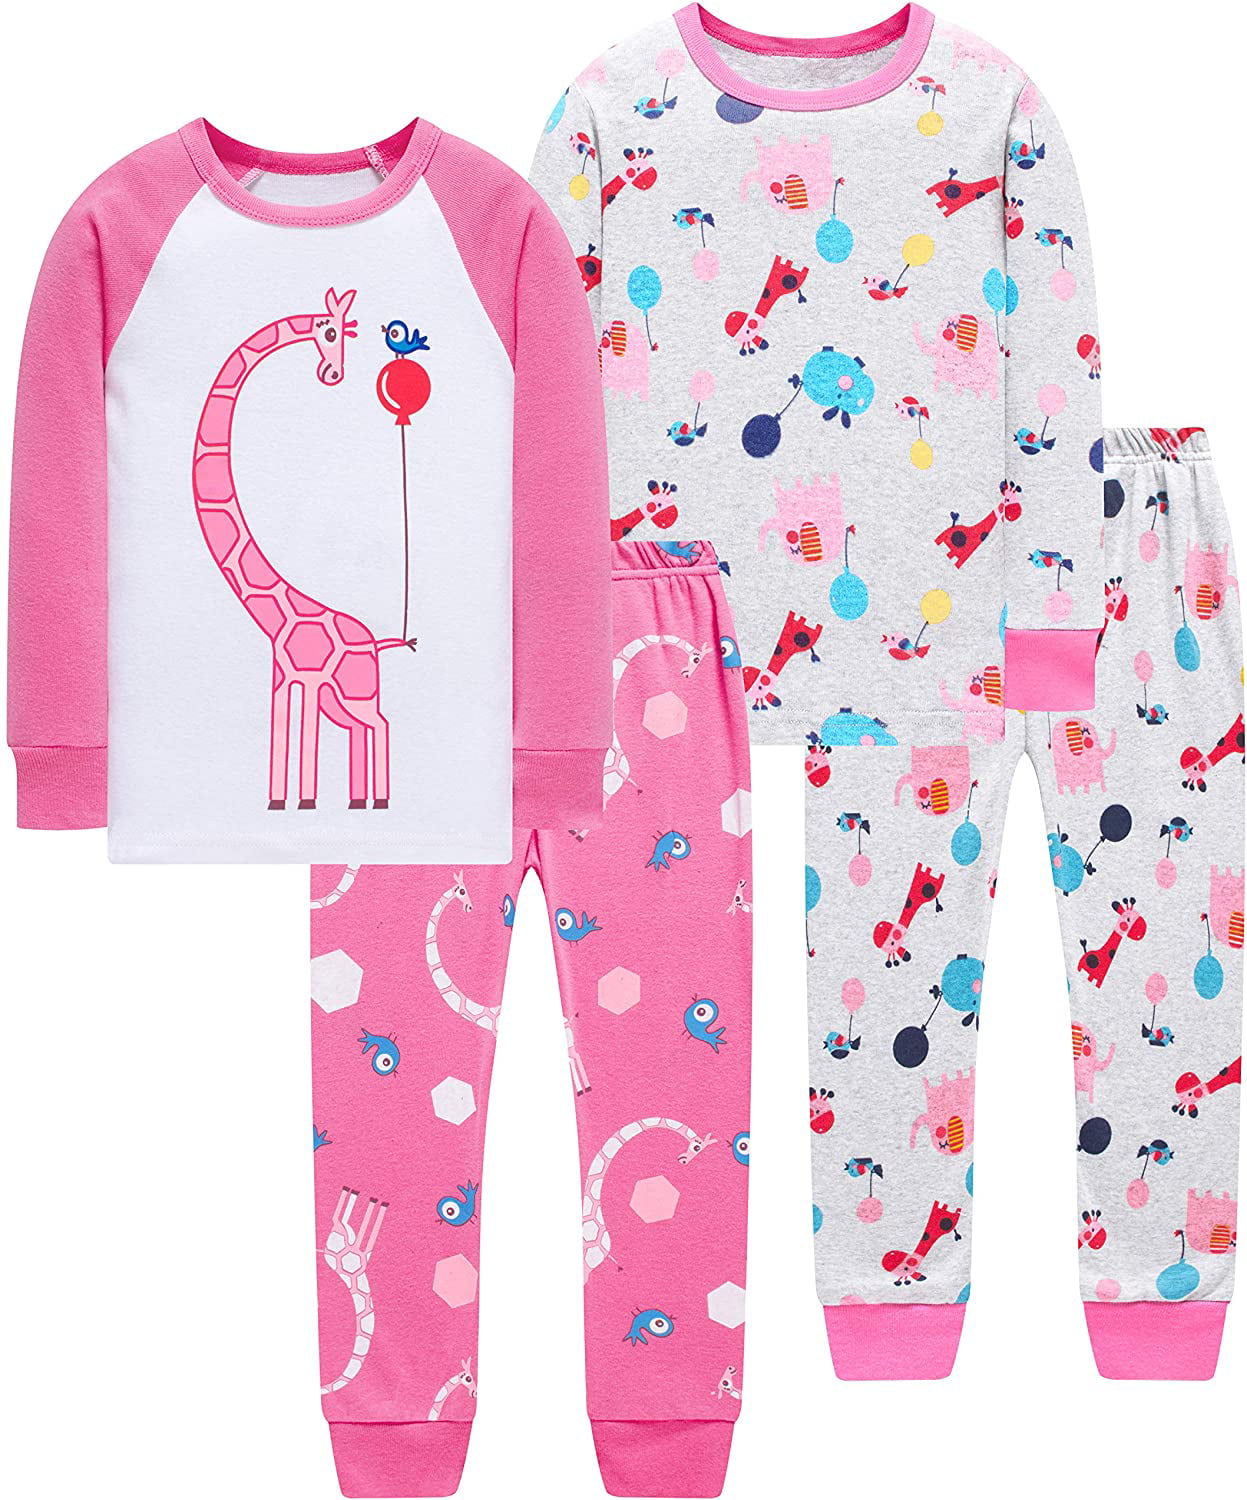 Pajamas for Girls Toddler Kids Shoes Pyjamas Children 4 Pack 4-Pieces Princess Sleepwear Pants Set 